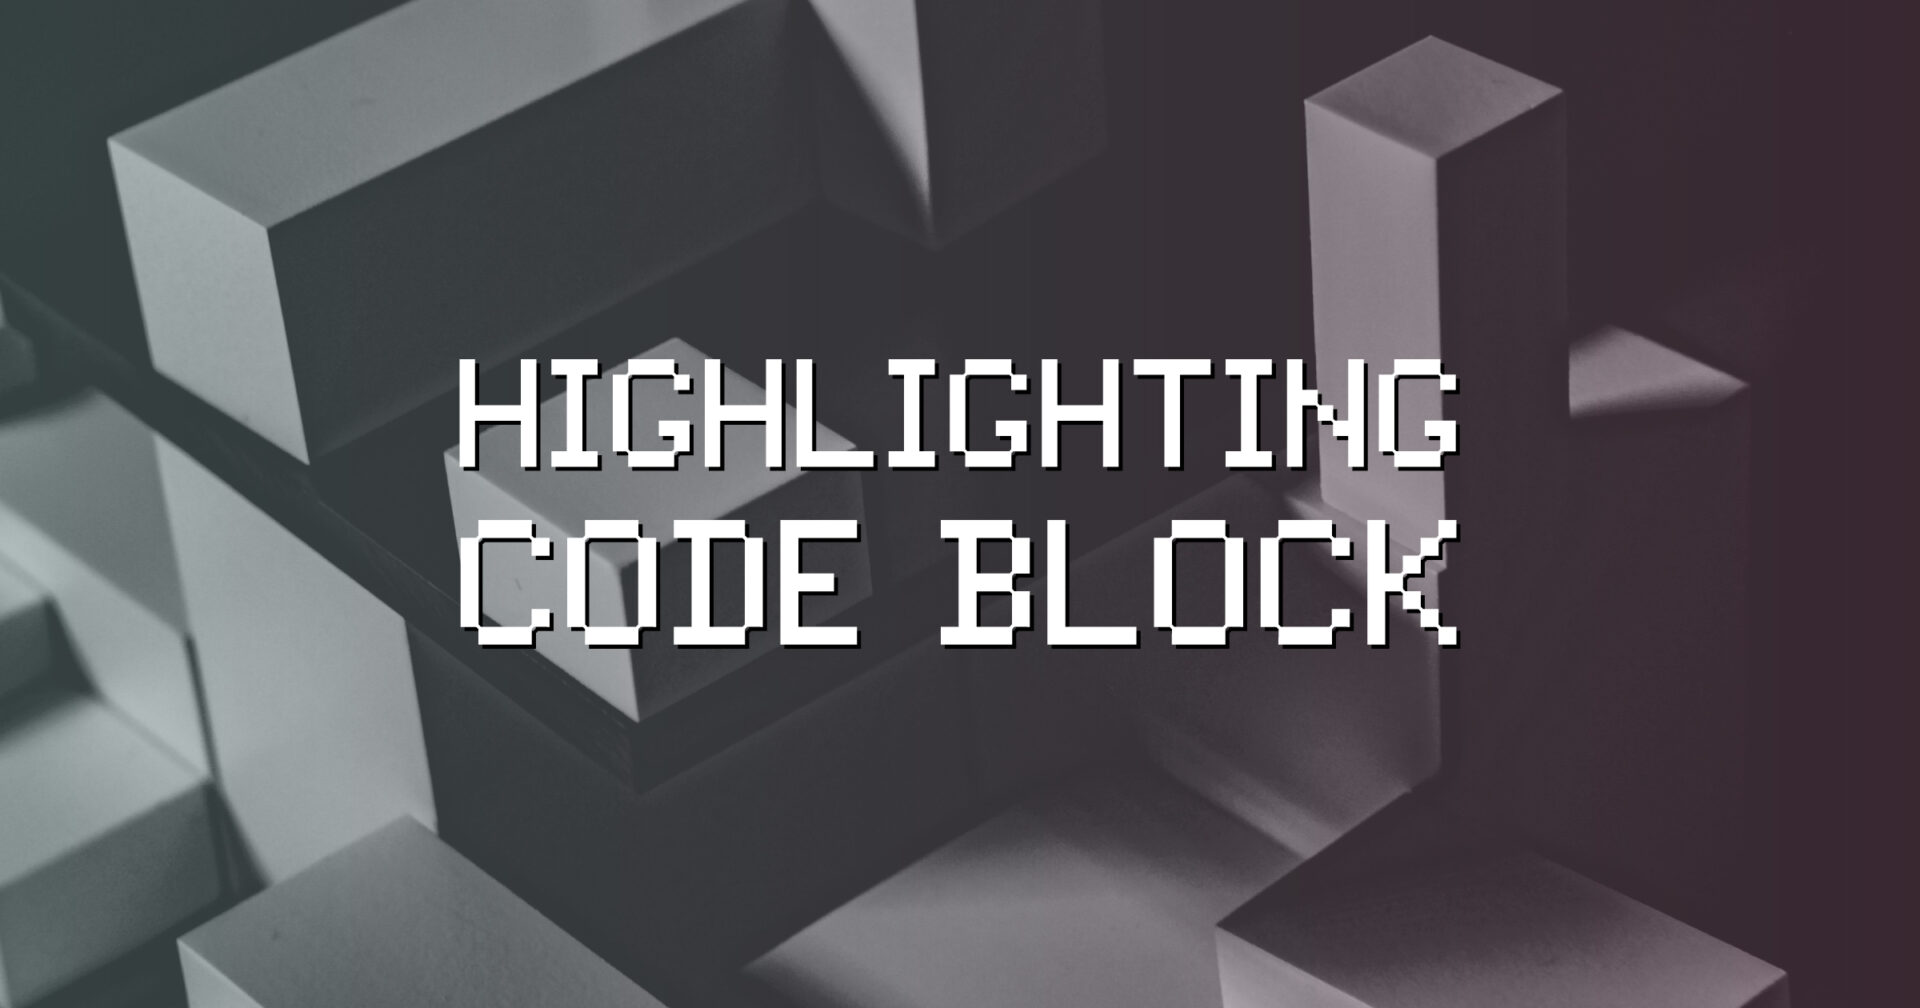 WordPressでソースコードの表示・埋め込みプラグインなら【Highlighting Code Block】がお勧め